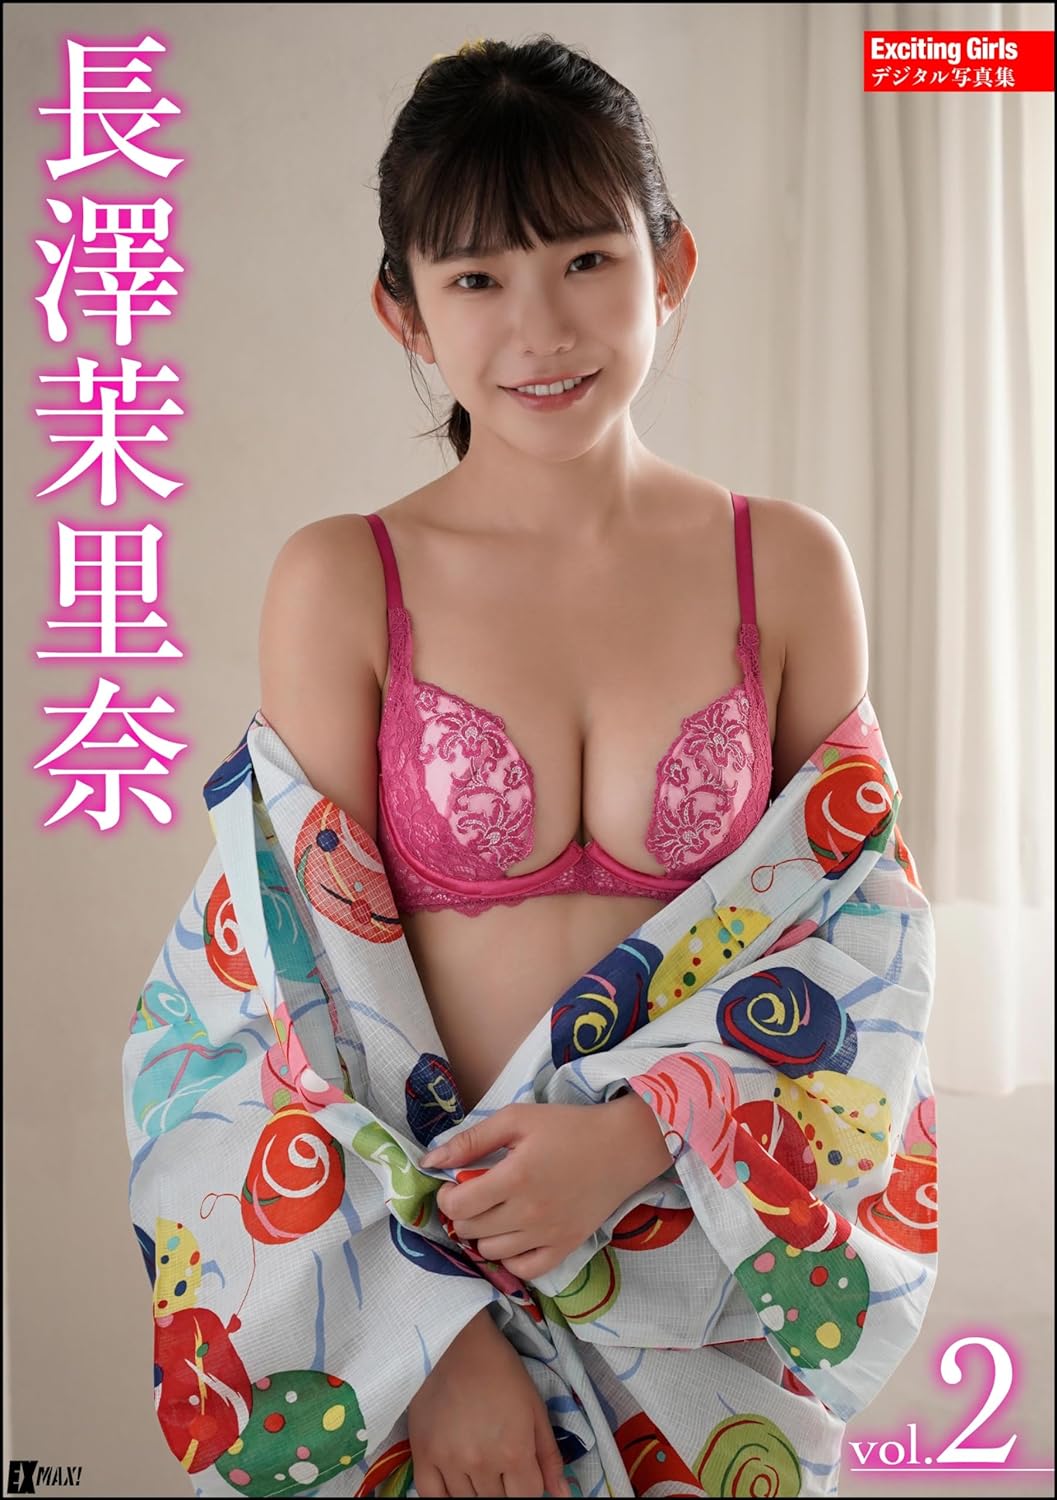 Exciting Girls 長澤茉里奈デジタル写真集 Vol.2 Kindle版のサンプル画像